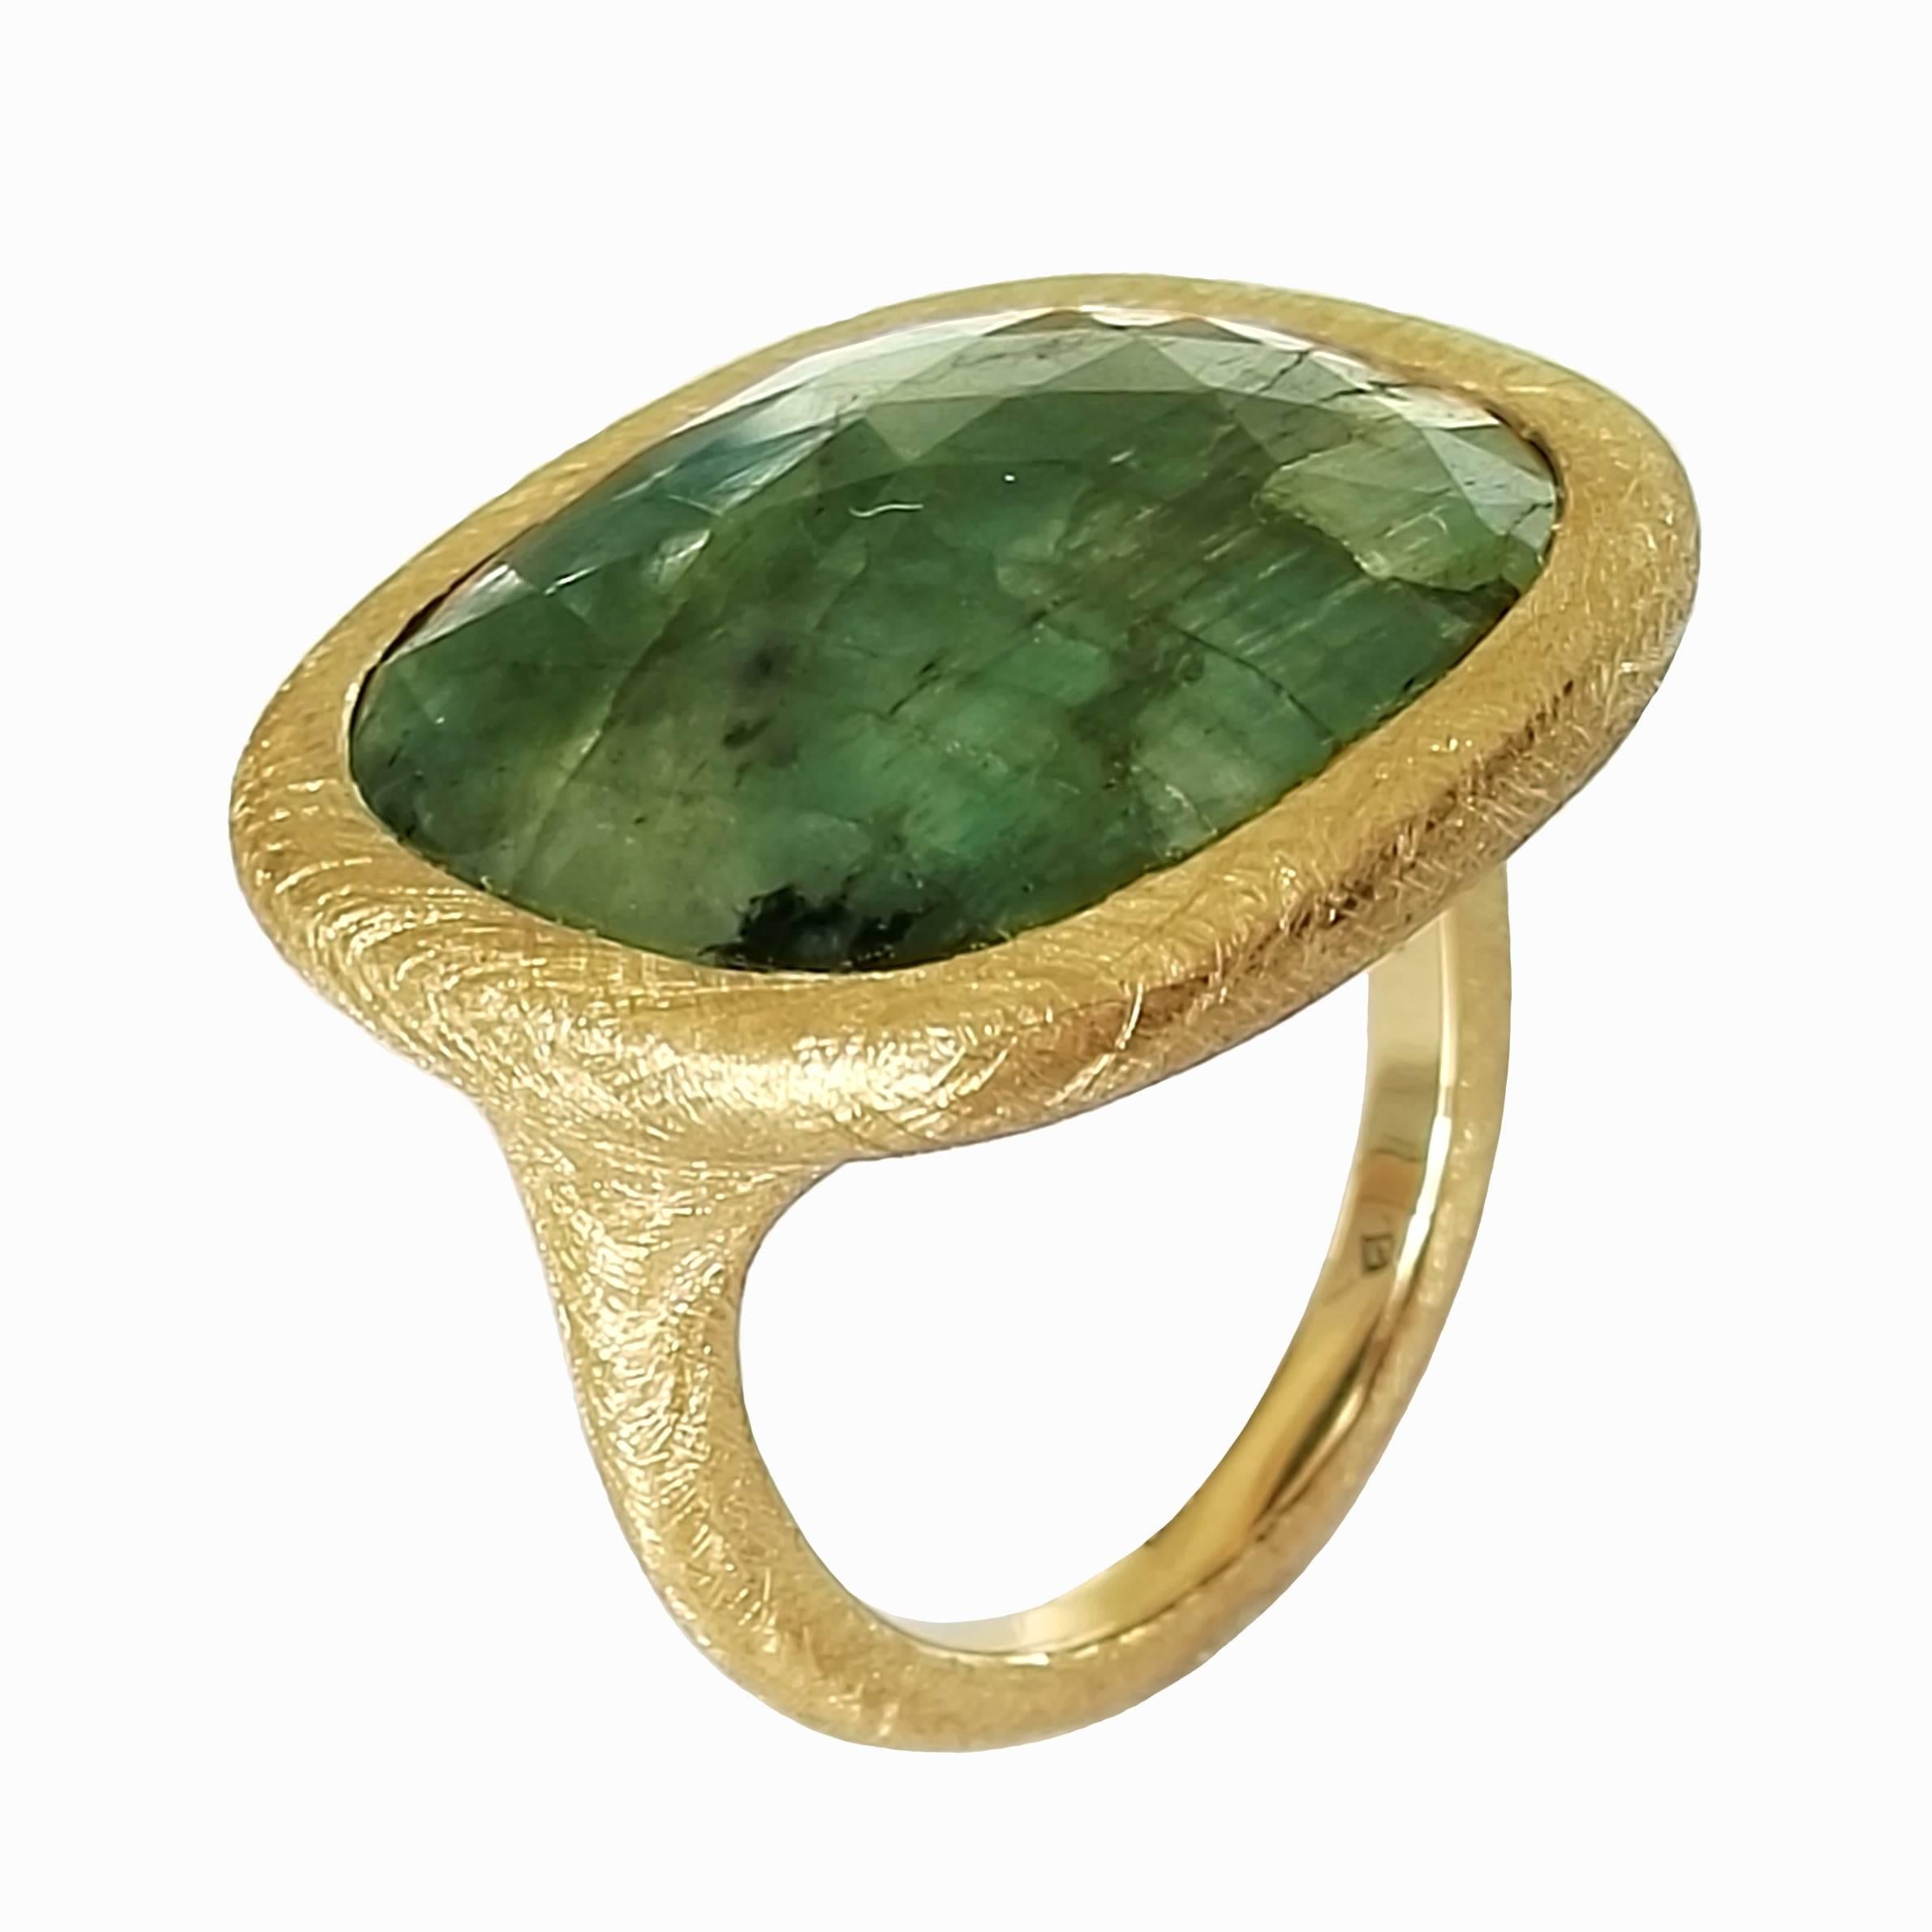 Dalben Raw Emerald Slice Gold Ring